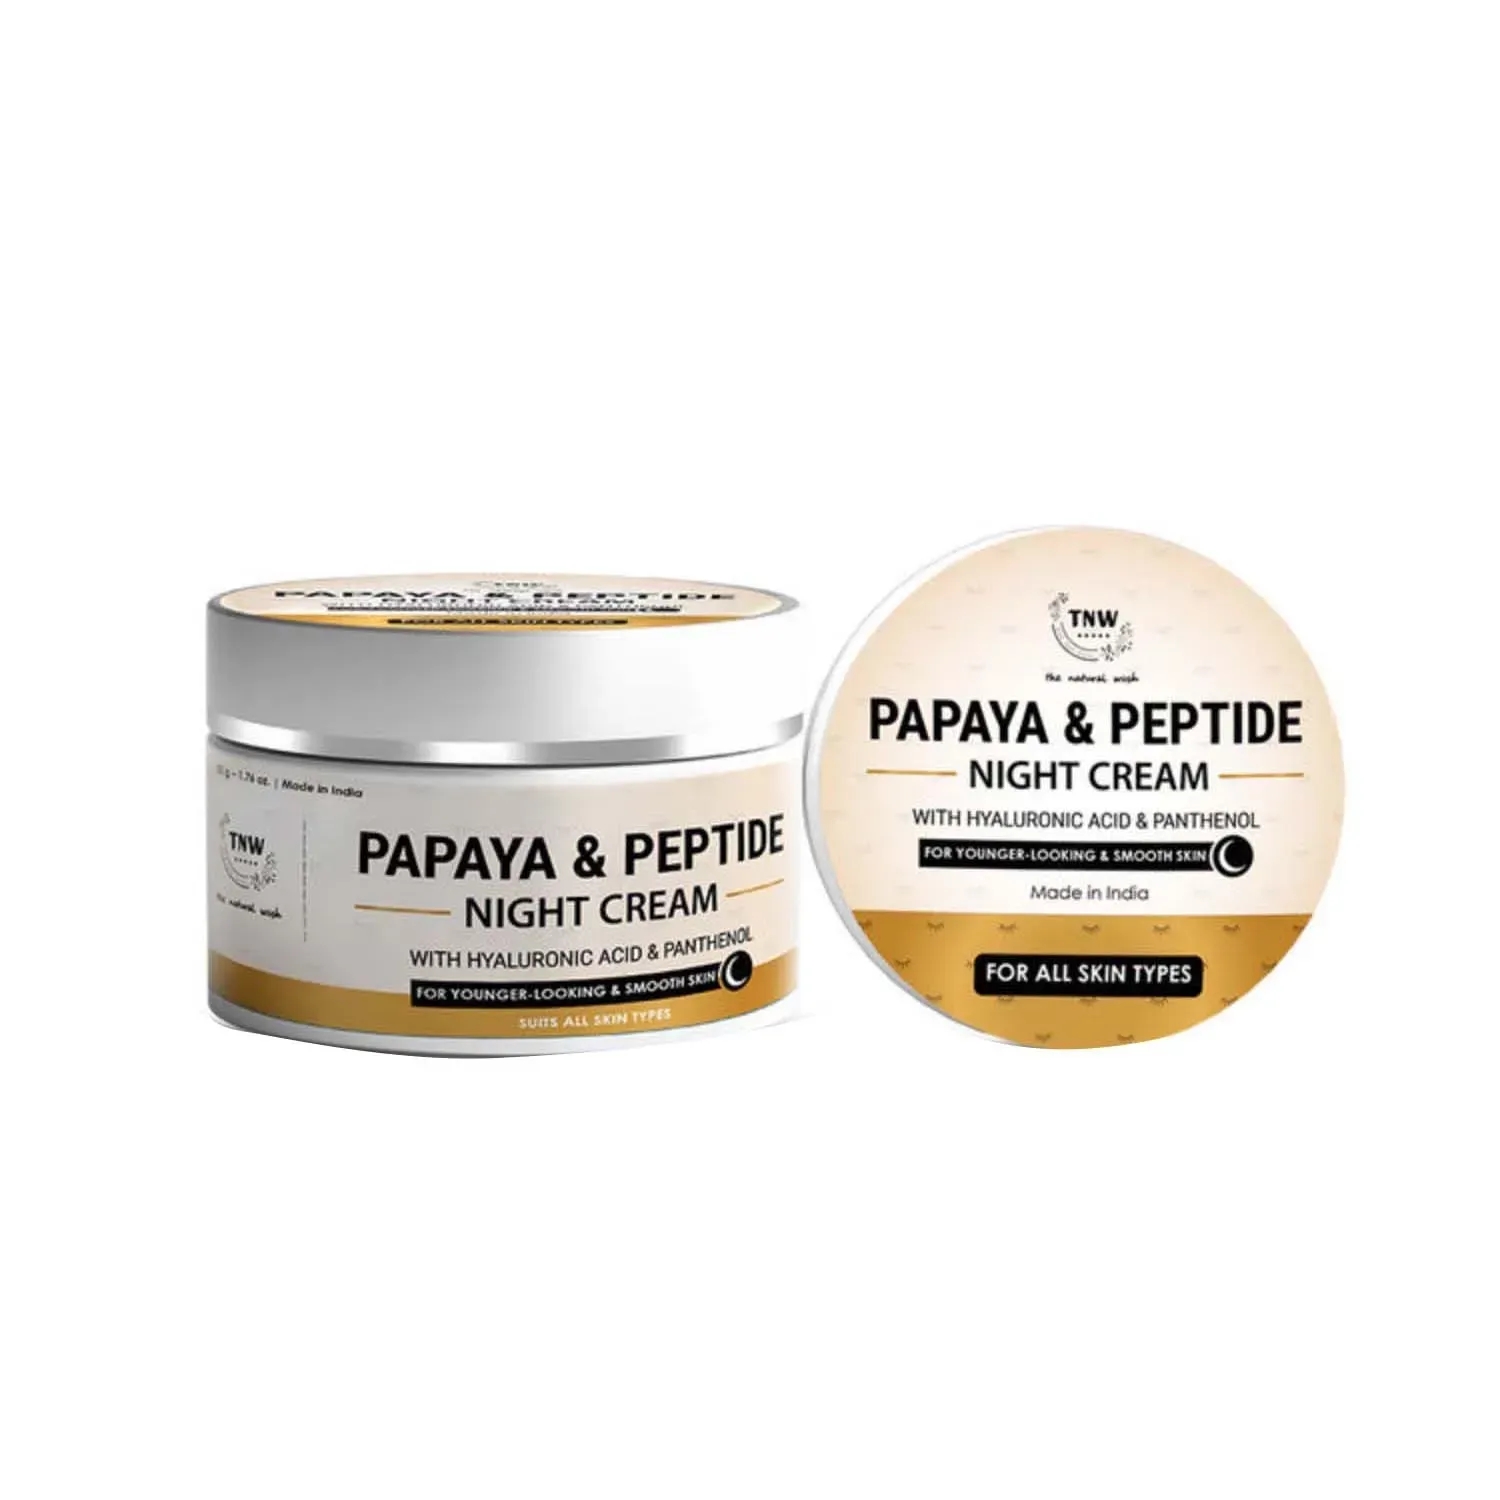 TNW The Natural Wash Papaya & Peptide Night Cream (50g)